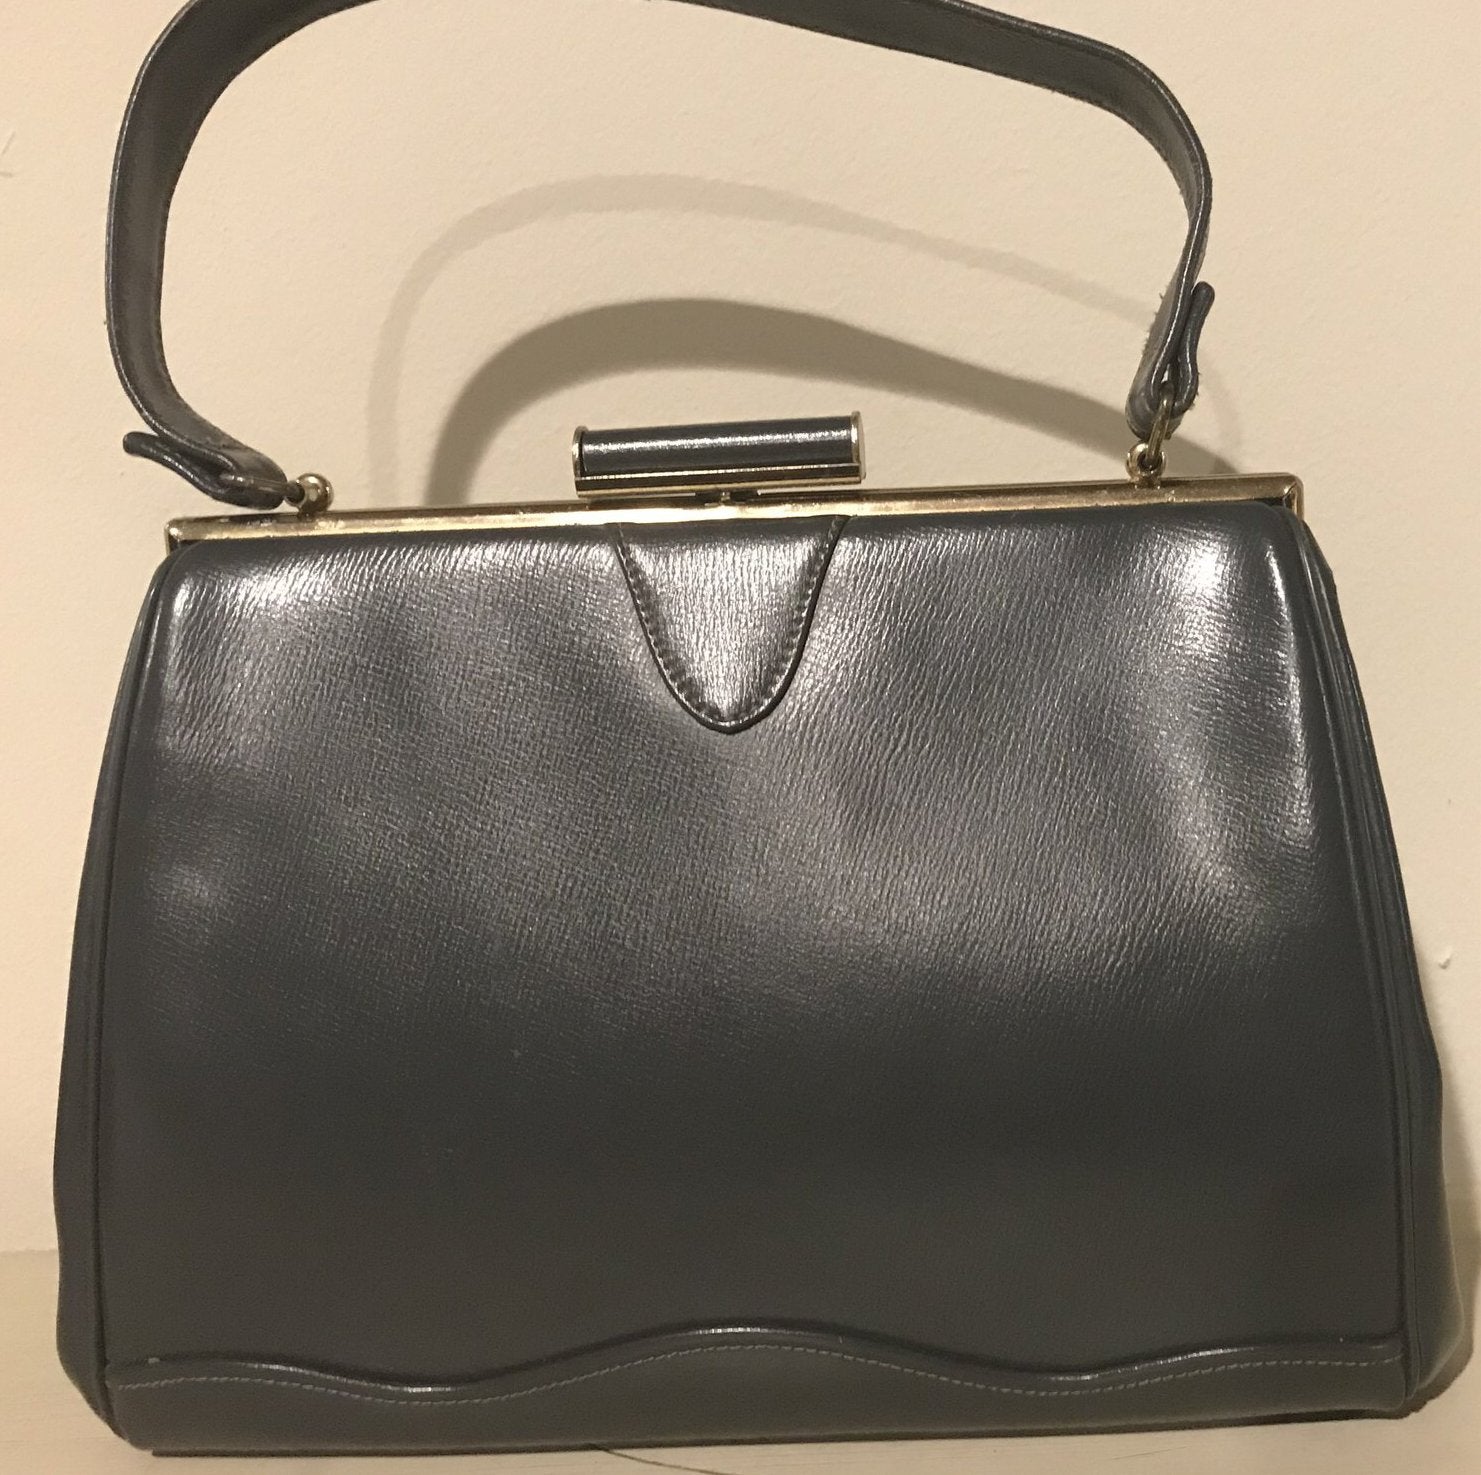 Vintage Gray Leather Handbag By Elite Handbags One Strap Handle